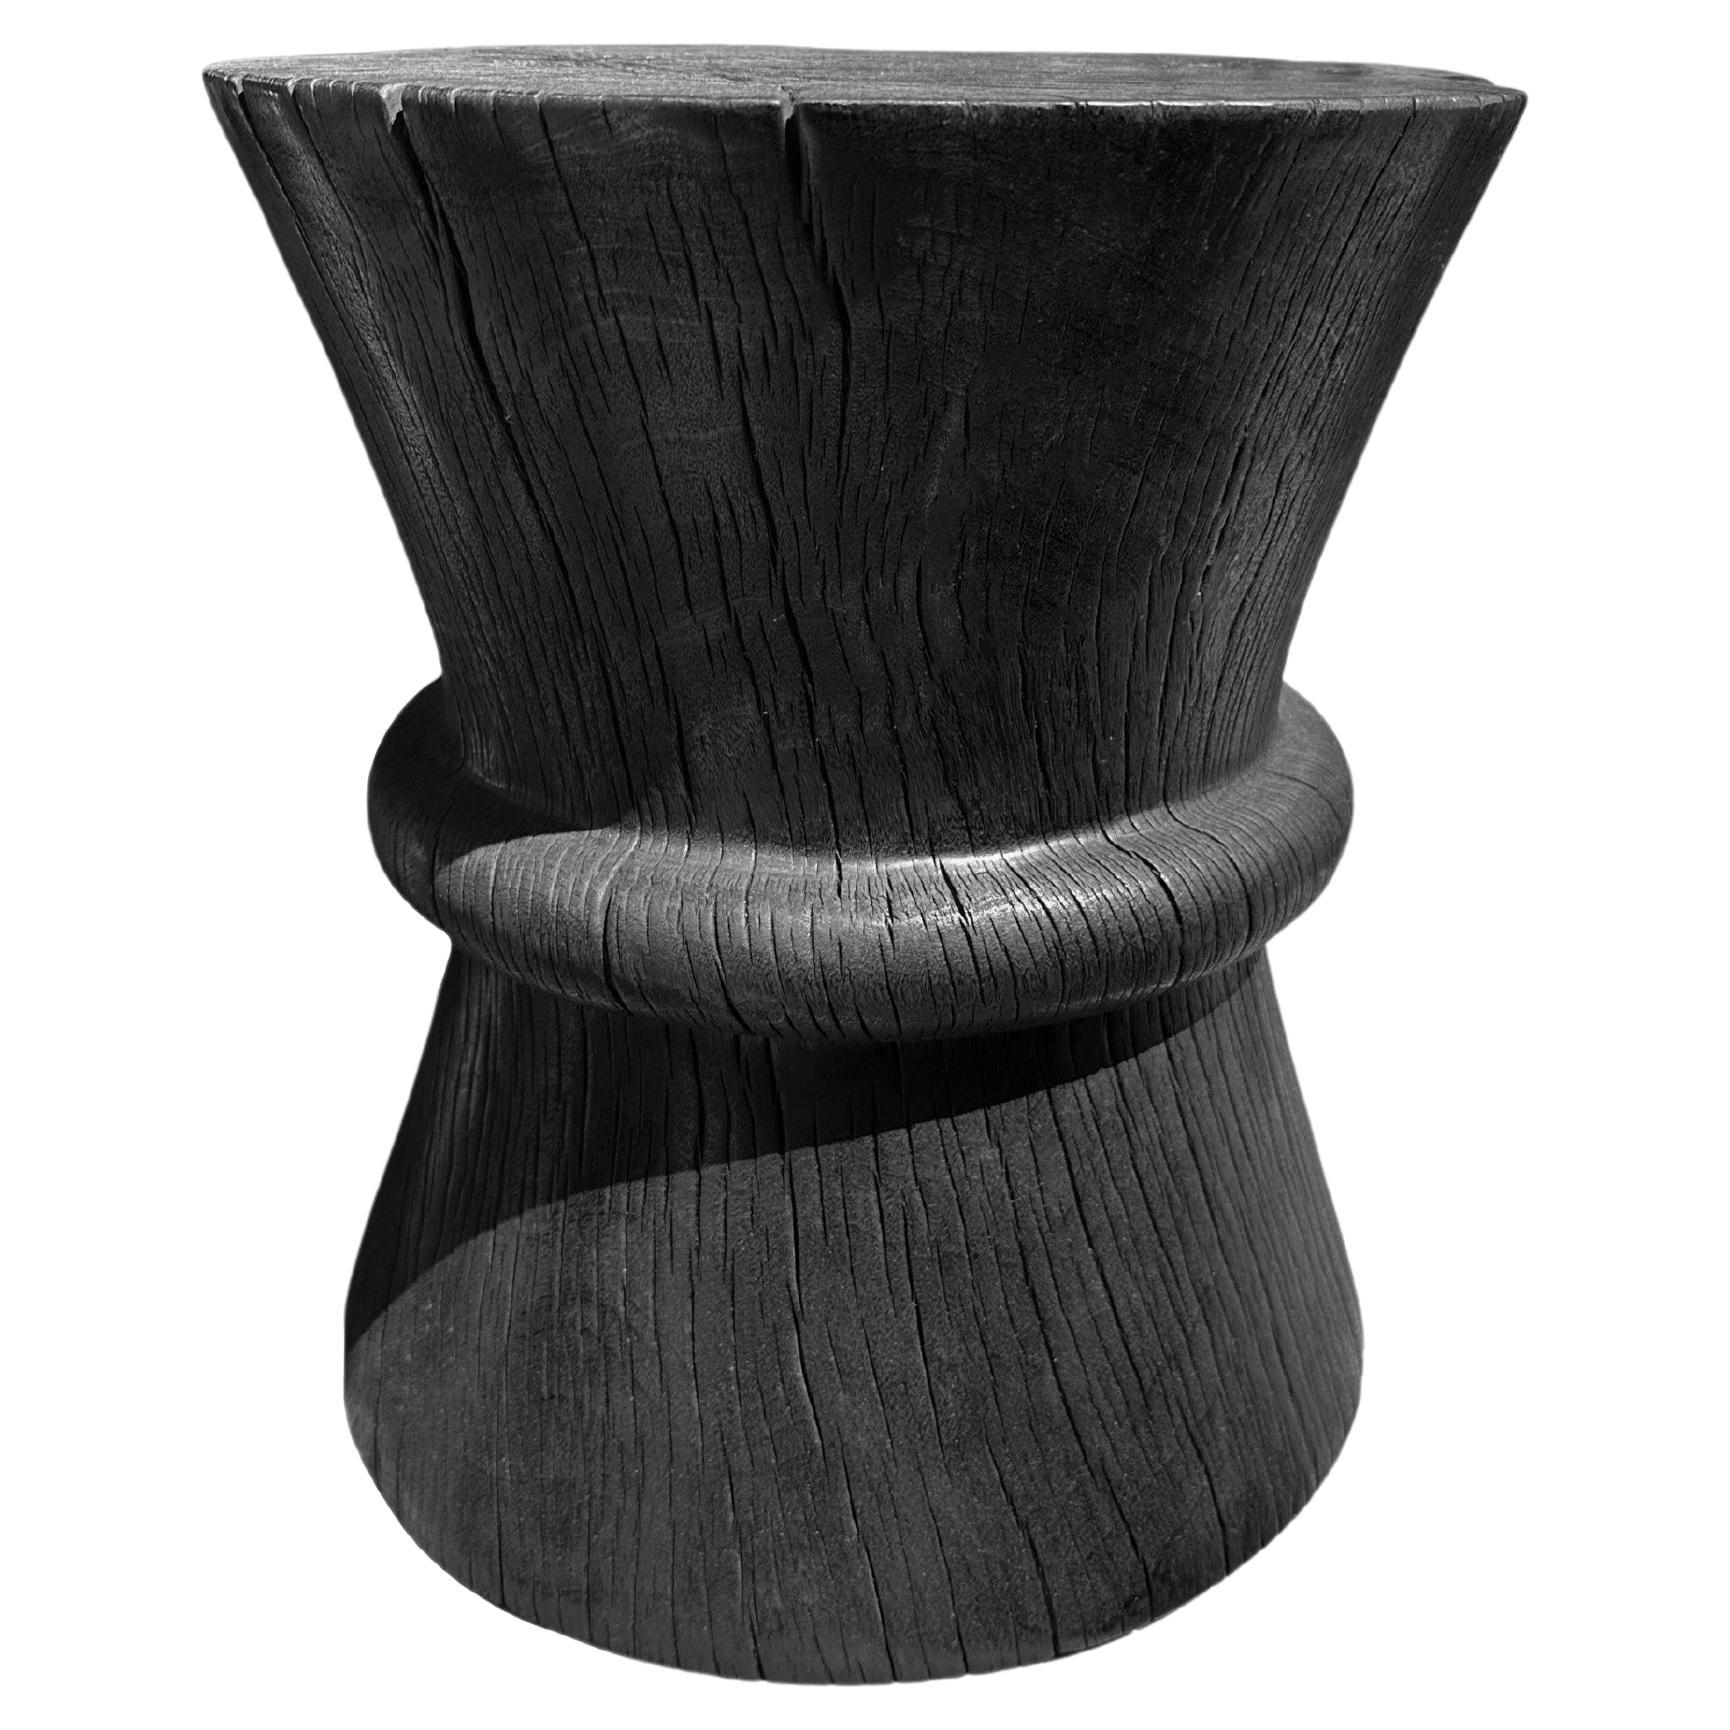 Sculptural Solid Tamarind Wood Table, Modern Organic, Burnt Finish